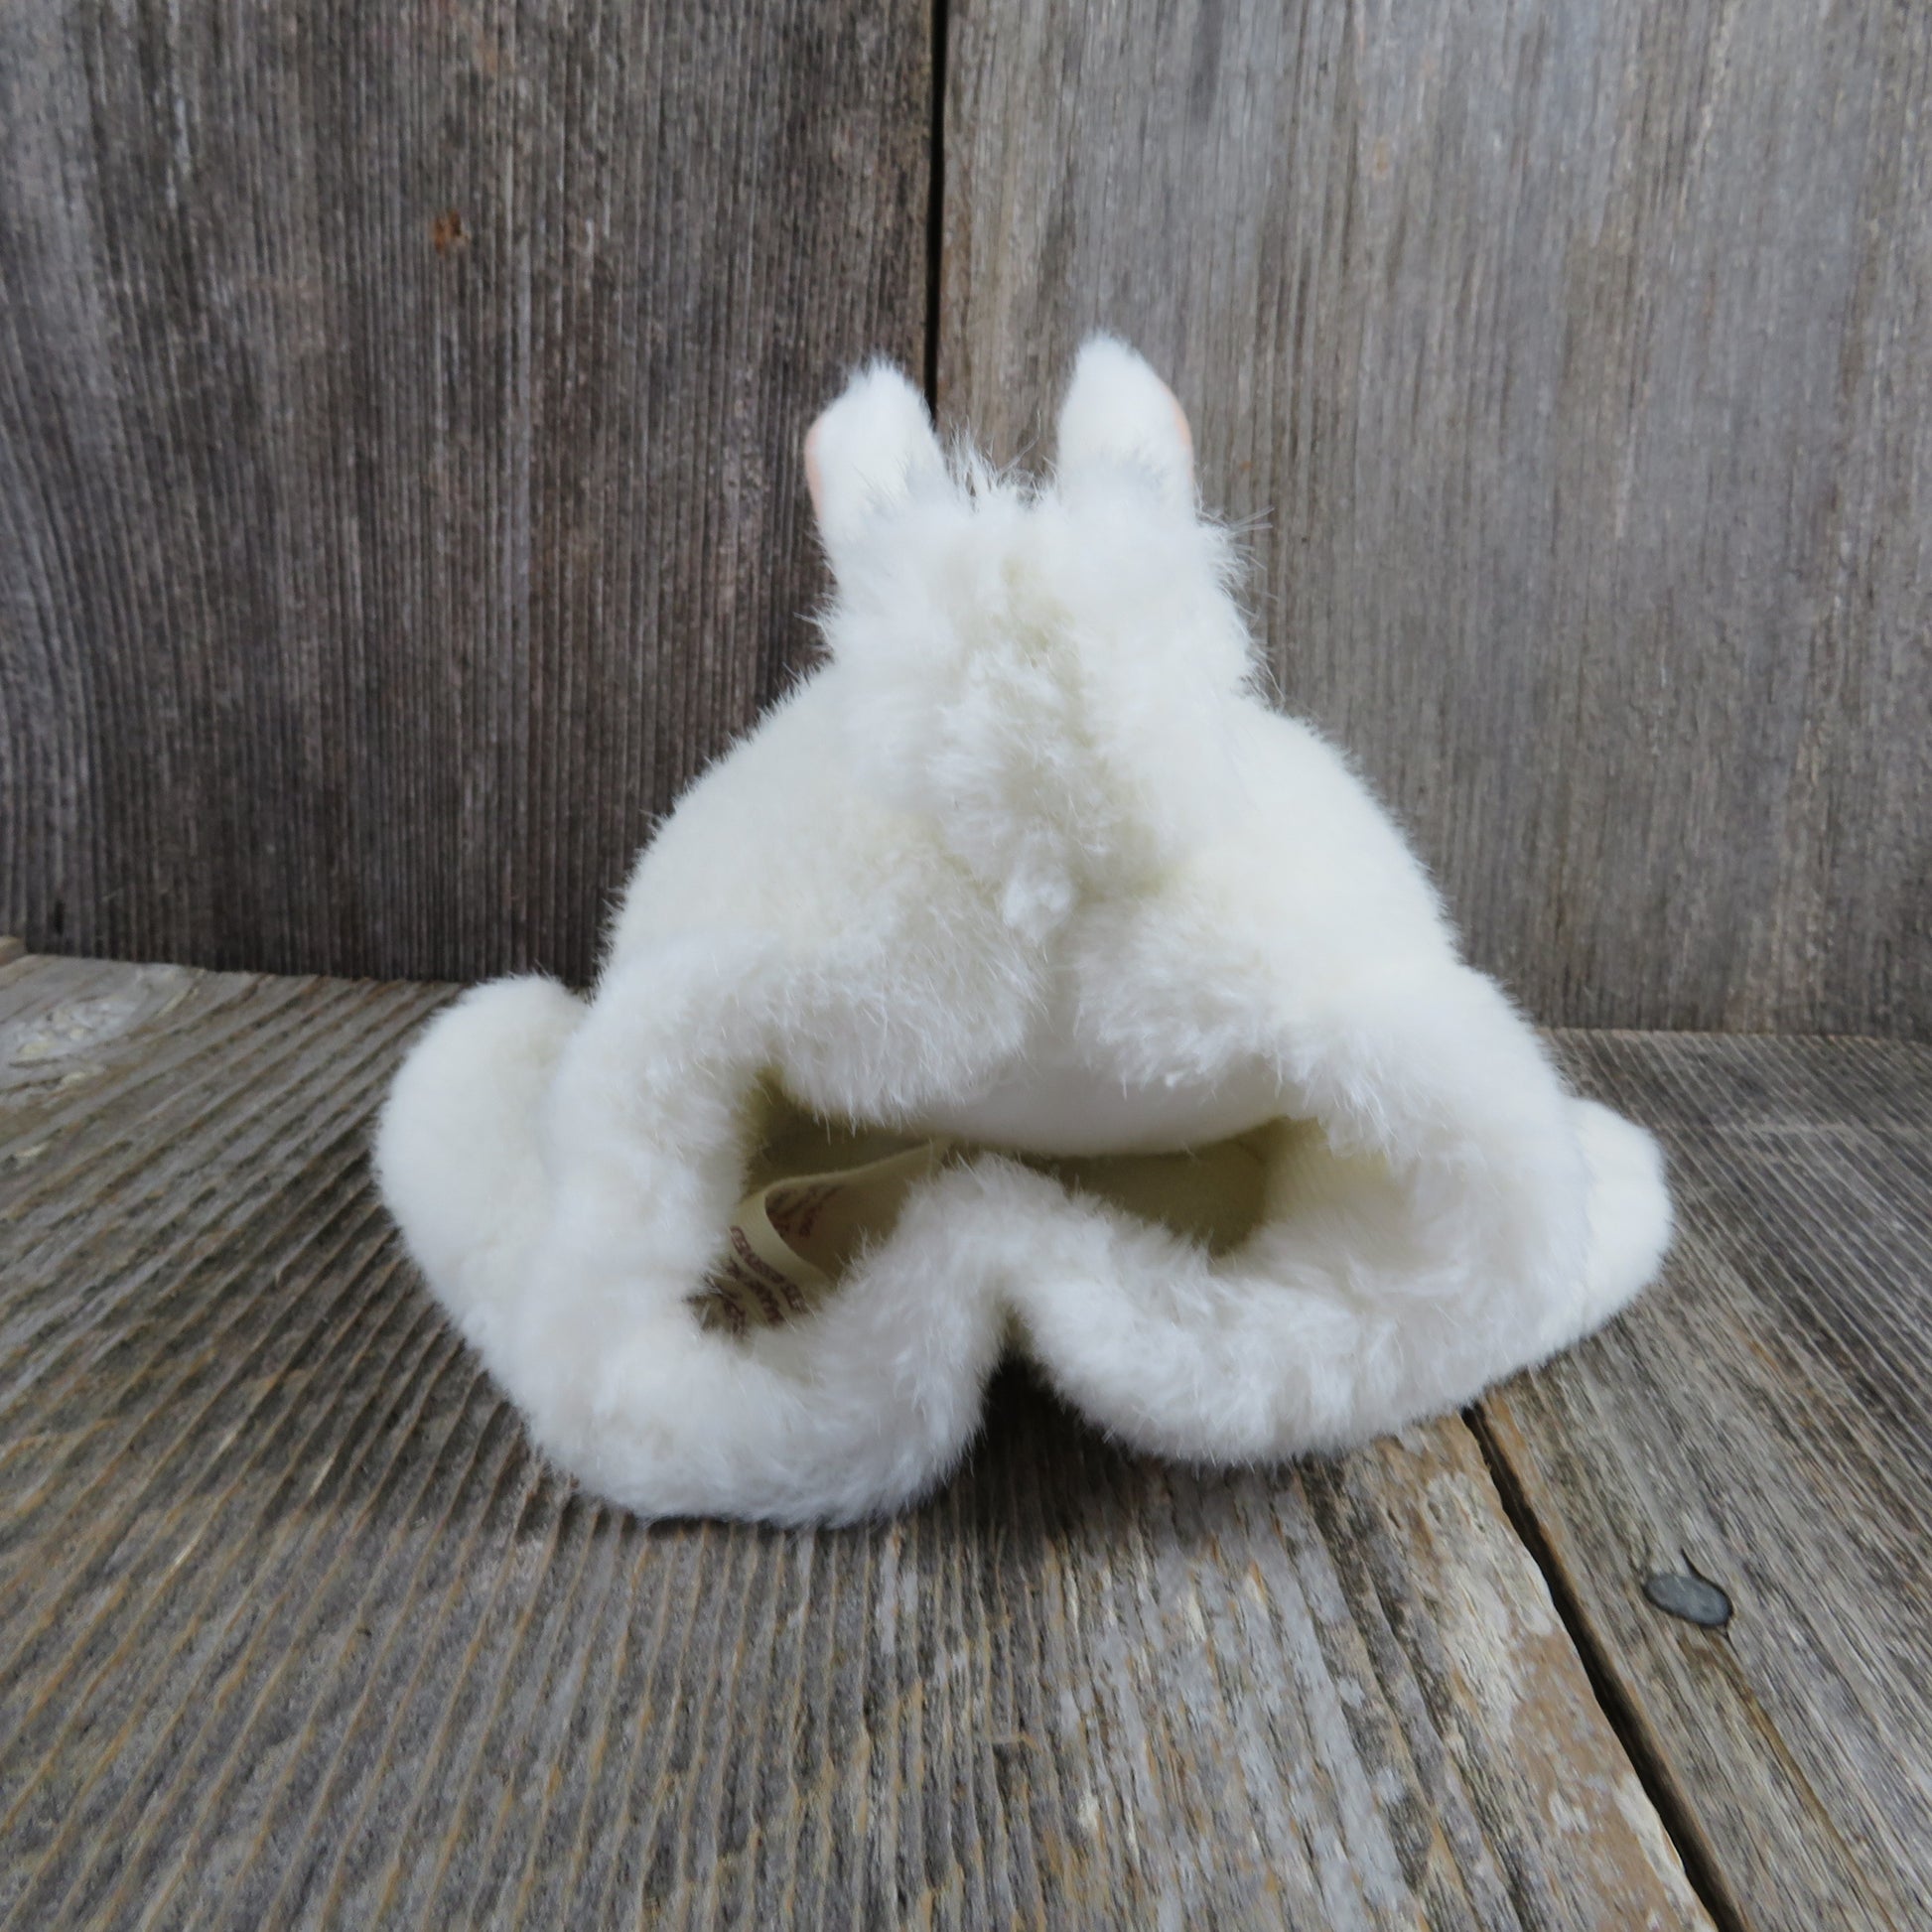 Bunny Rabbit Puppet Plush Folkmanis White Easter Glove Hand Stuffed Animal - At Grandma's Table